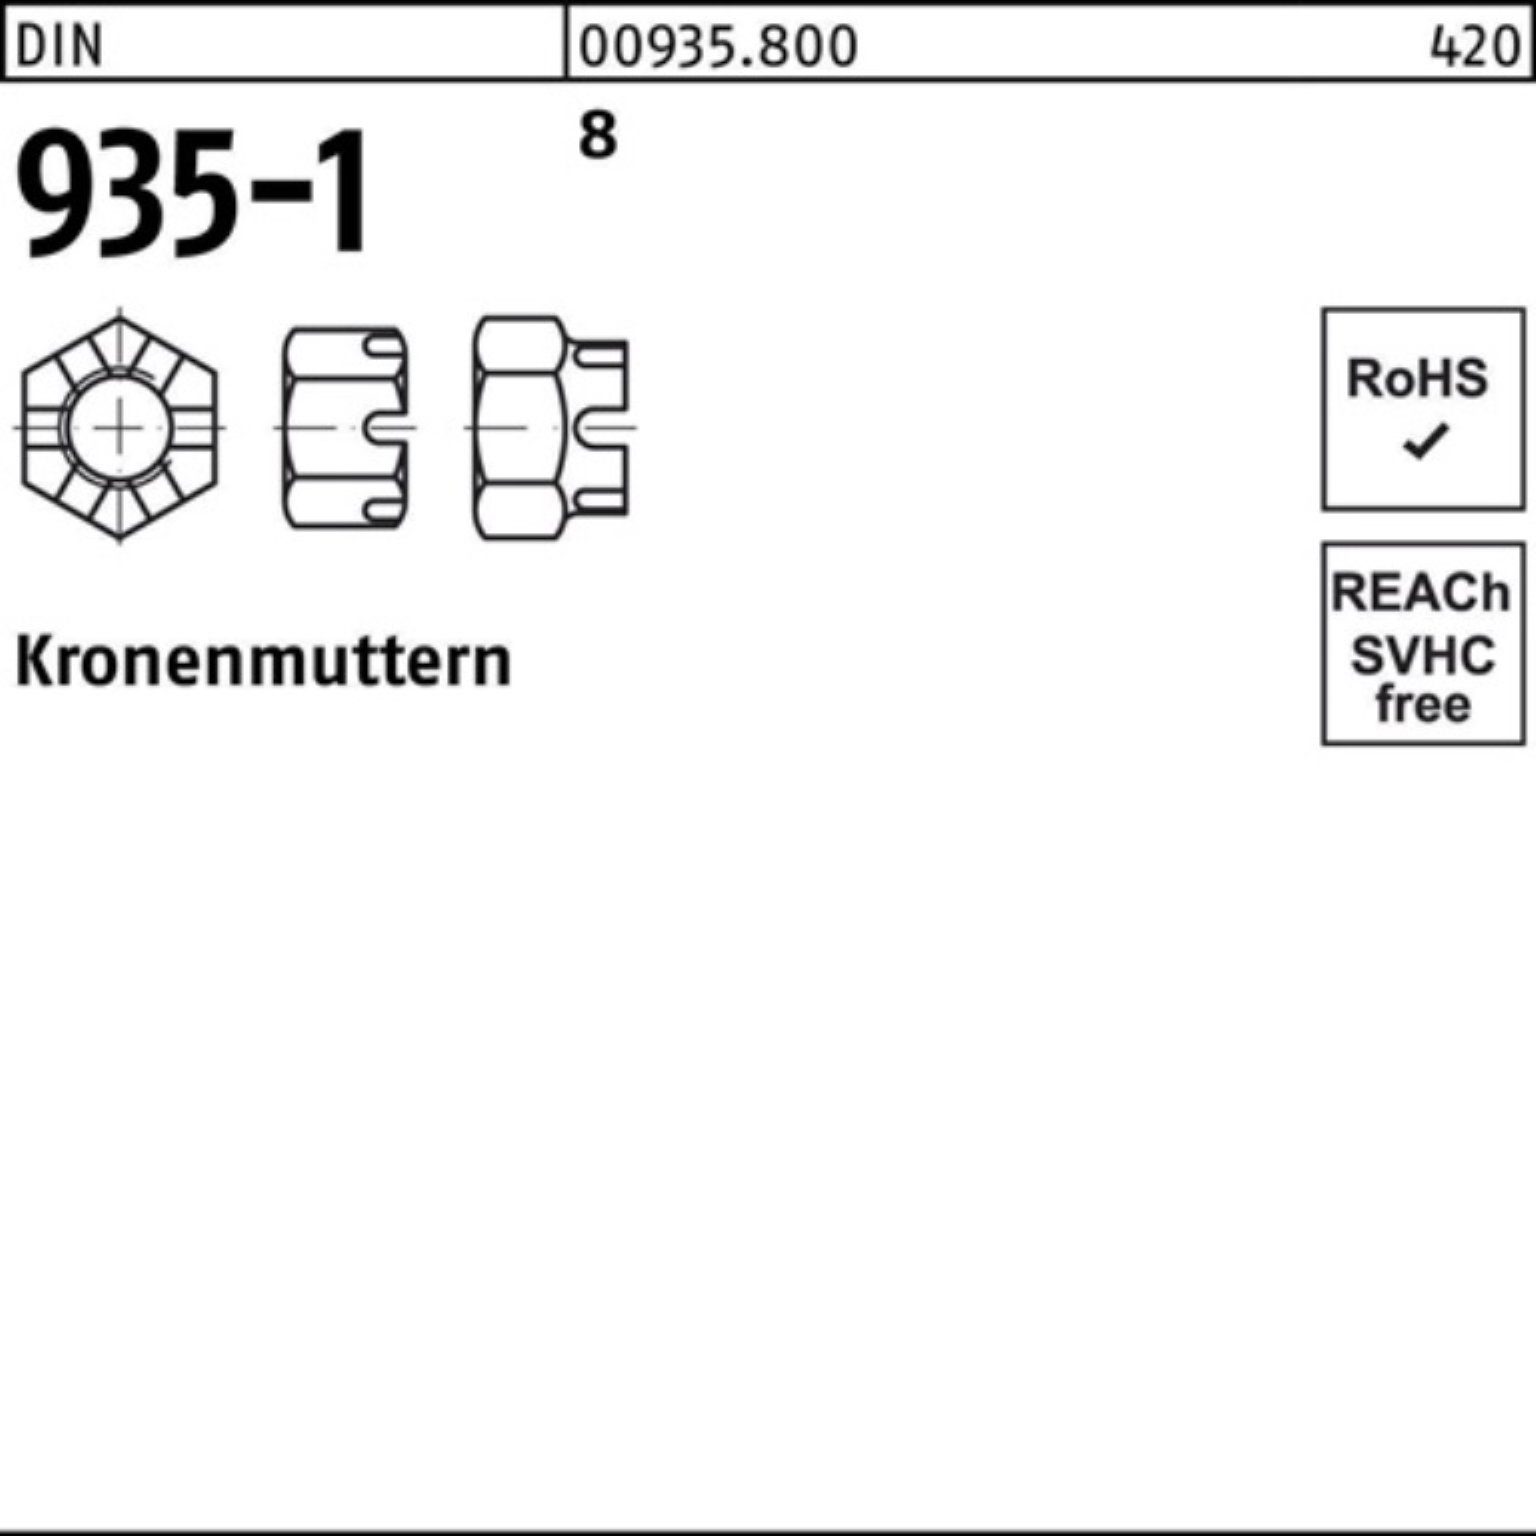 Reyher Kronenmutter 100er Pack Kronenmutter DIN 935-1 M42 8 1 Stück DIN 935-1 8 Kronenmut